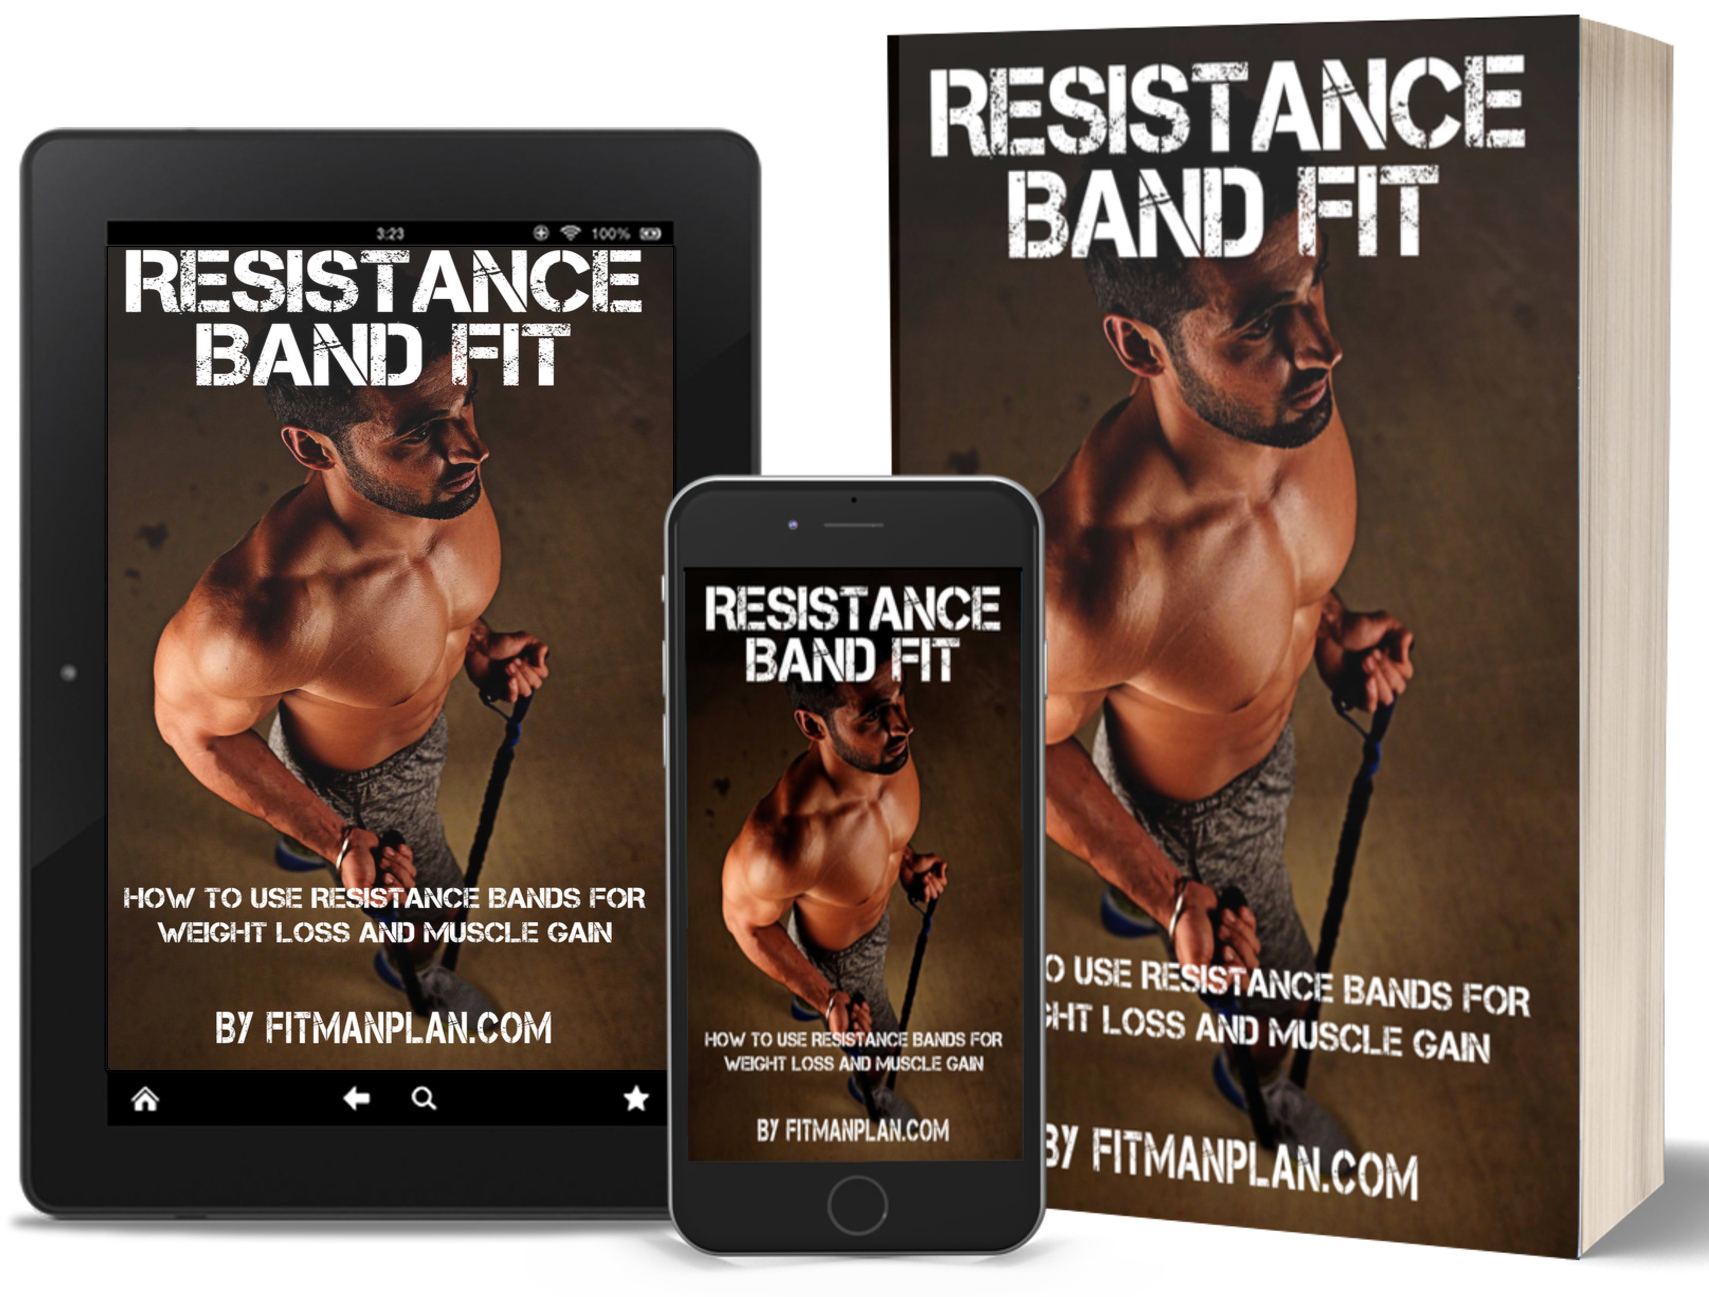 Free resistance band training